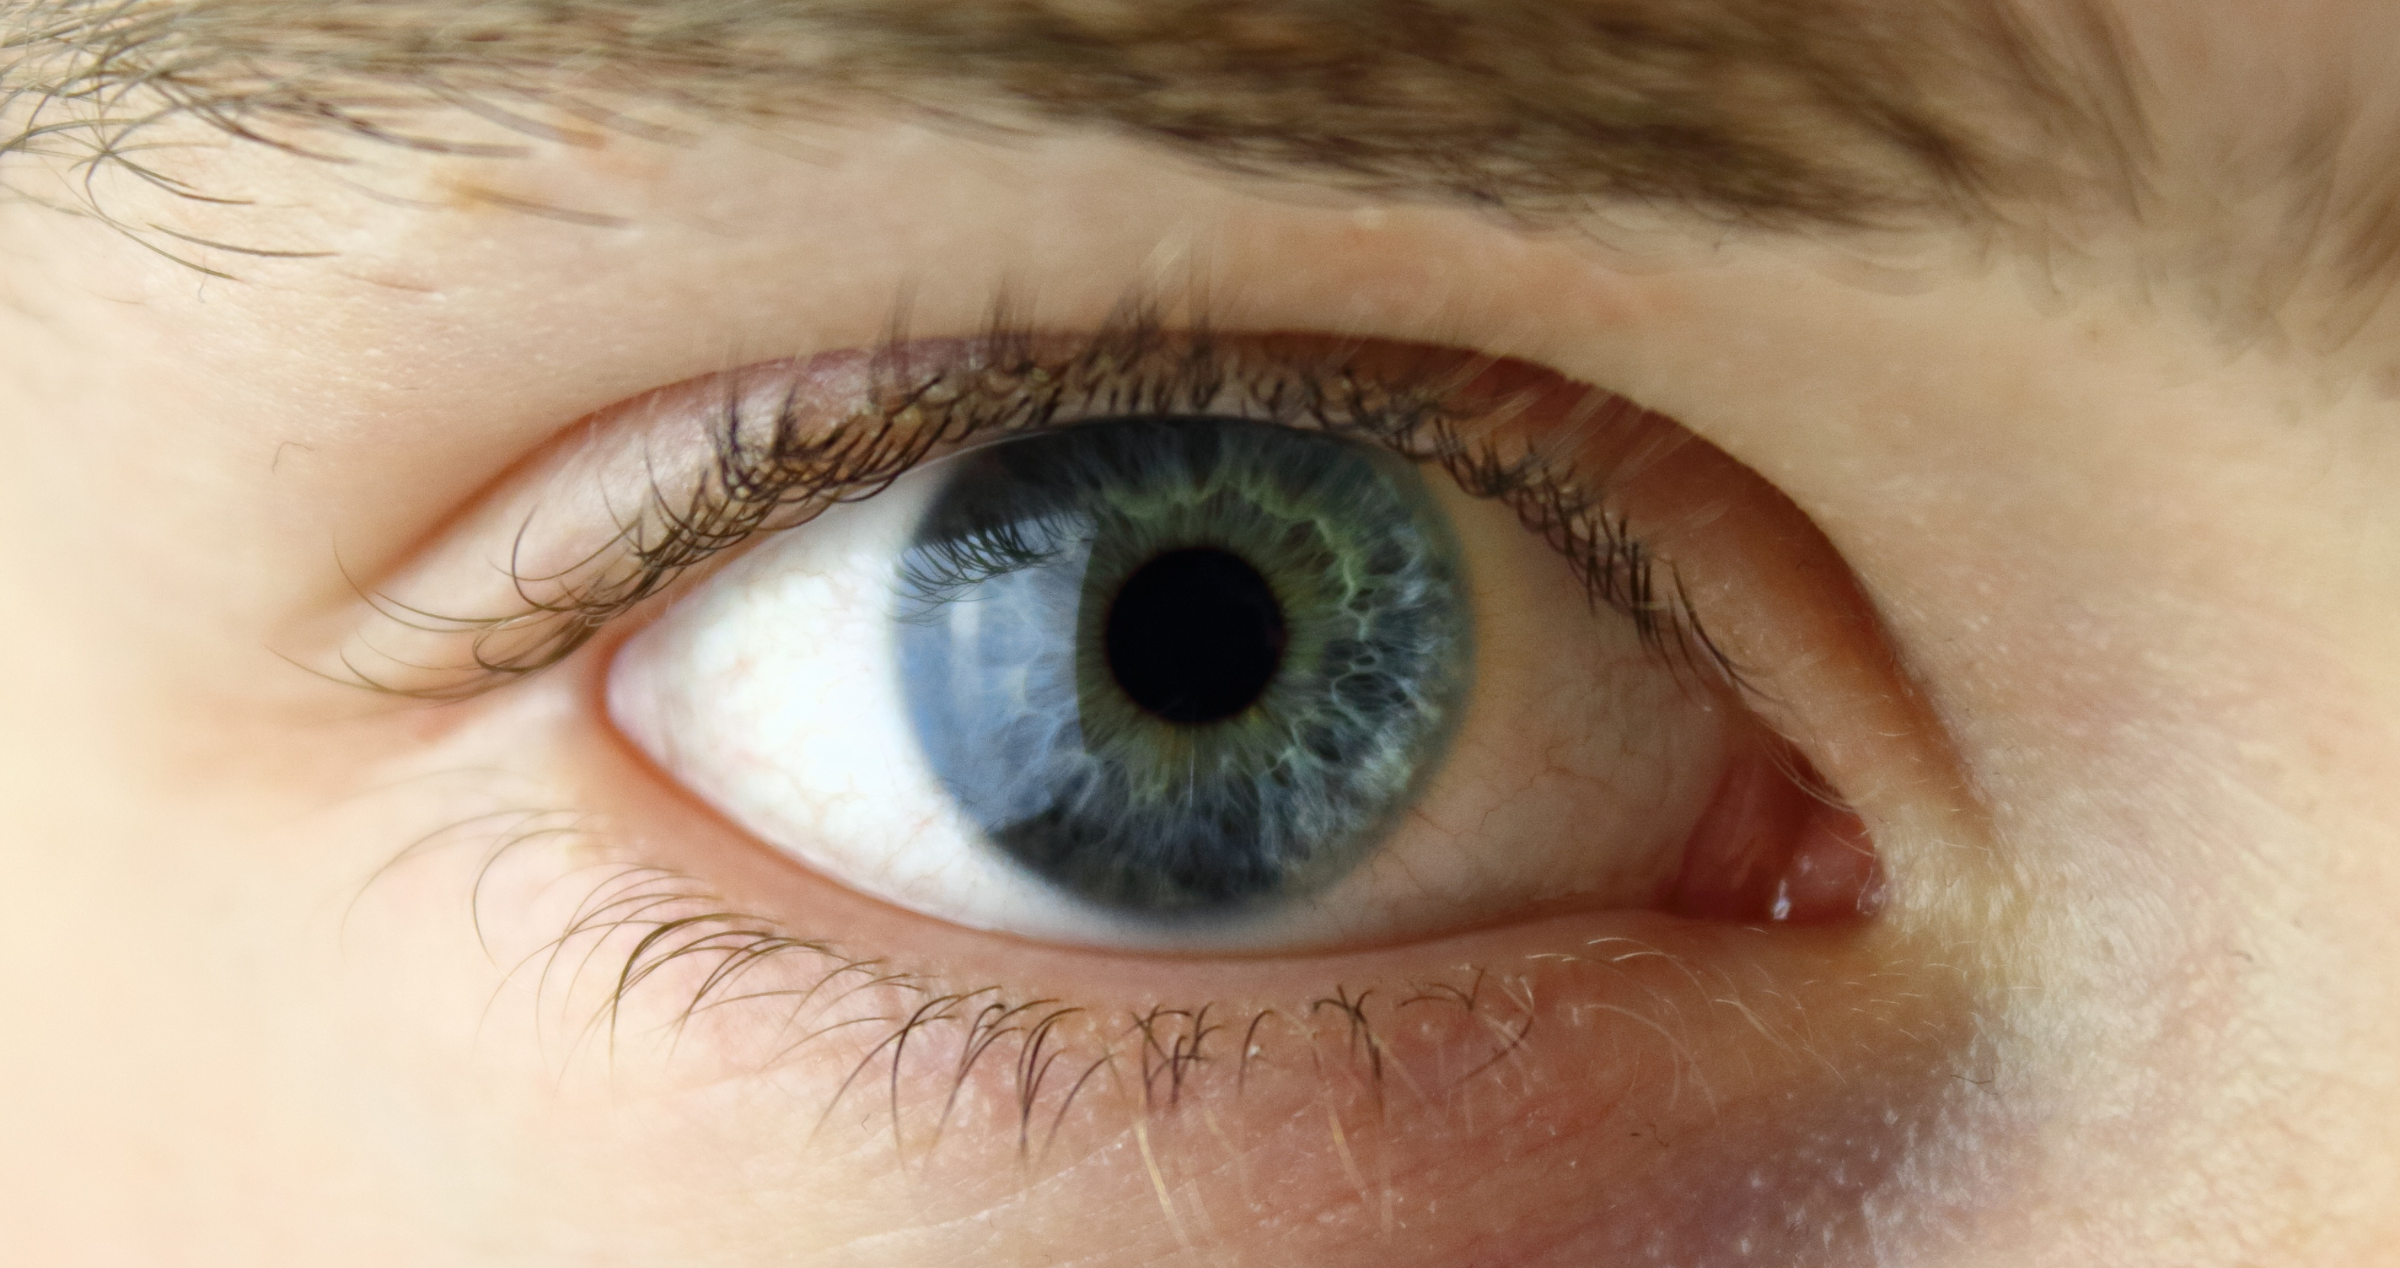 Closeup image of an eye